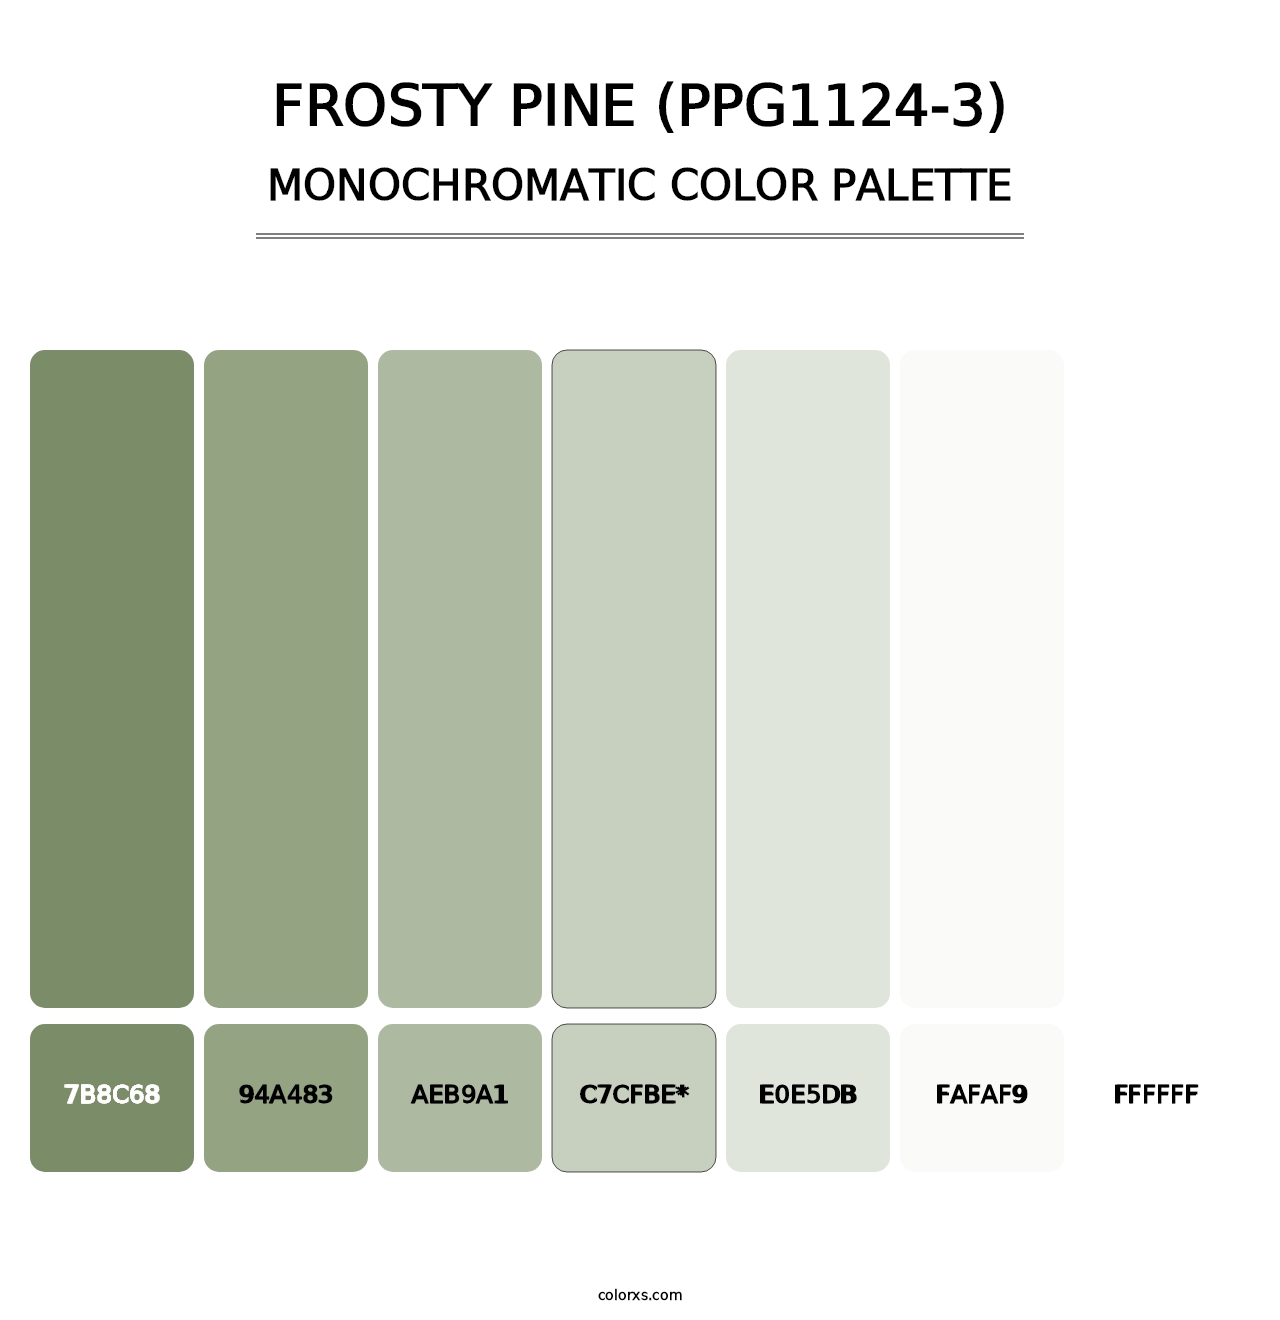 Frosty Pine (PPG1124-3) - Monochromatic Color Palette